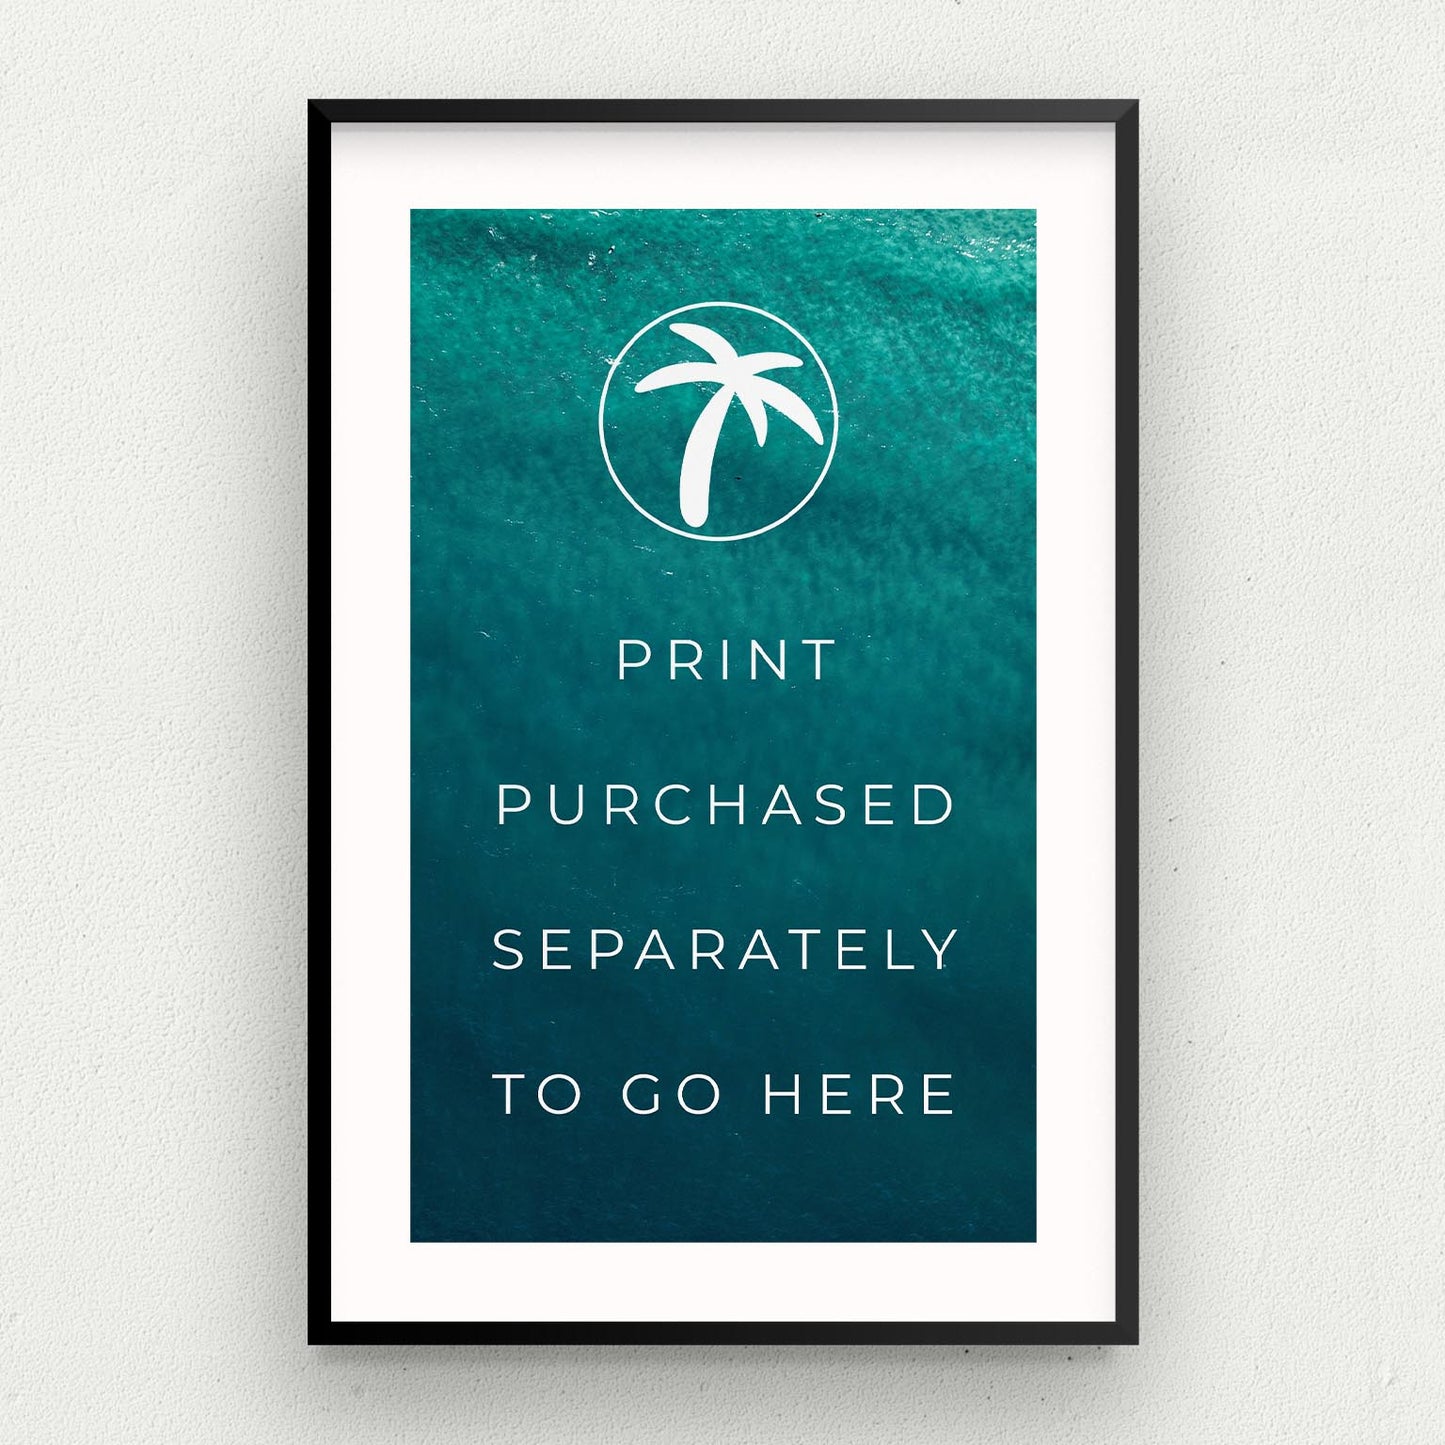 Frame your print